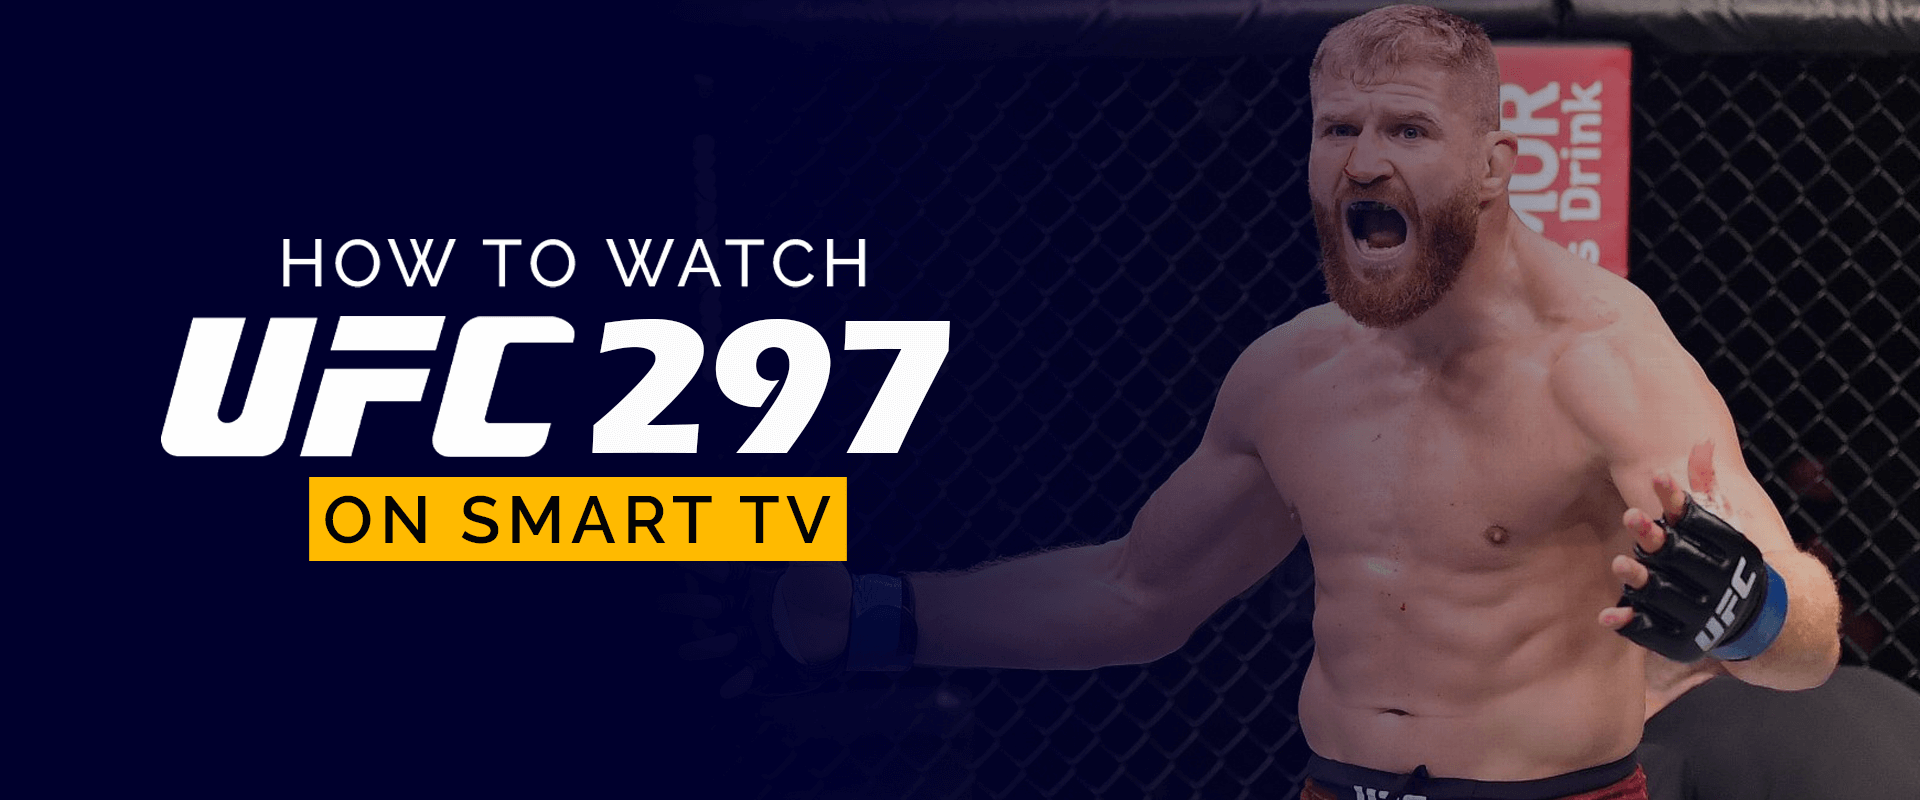 Jak oglądać UFC 297 na Smart TV